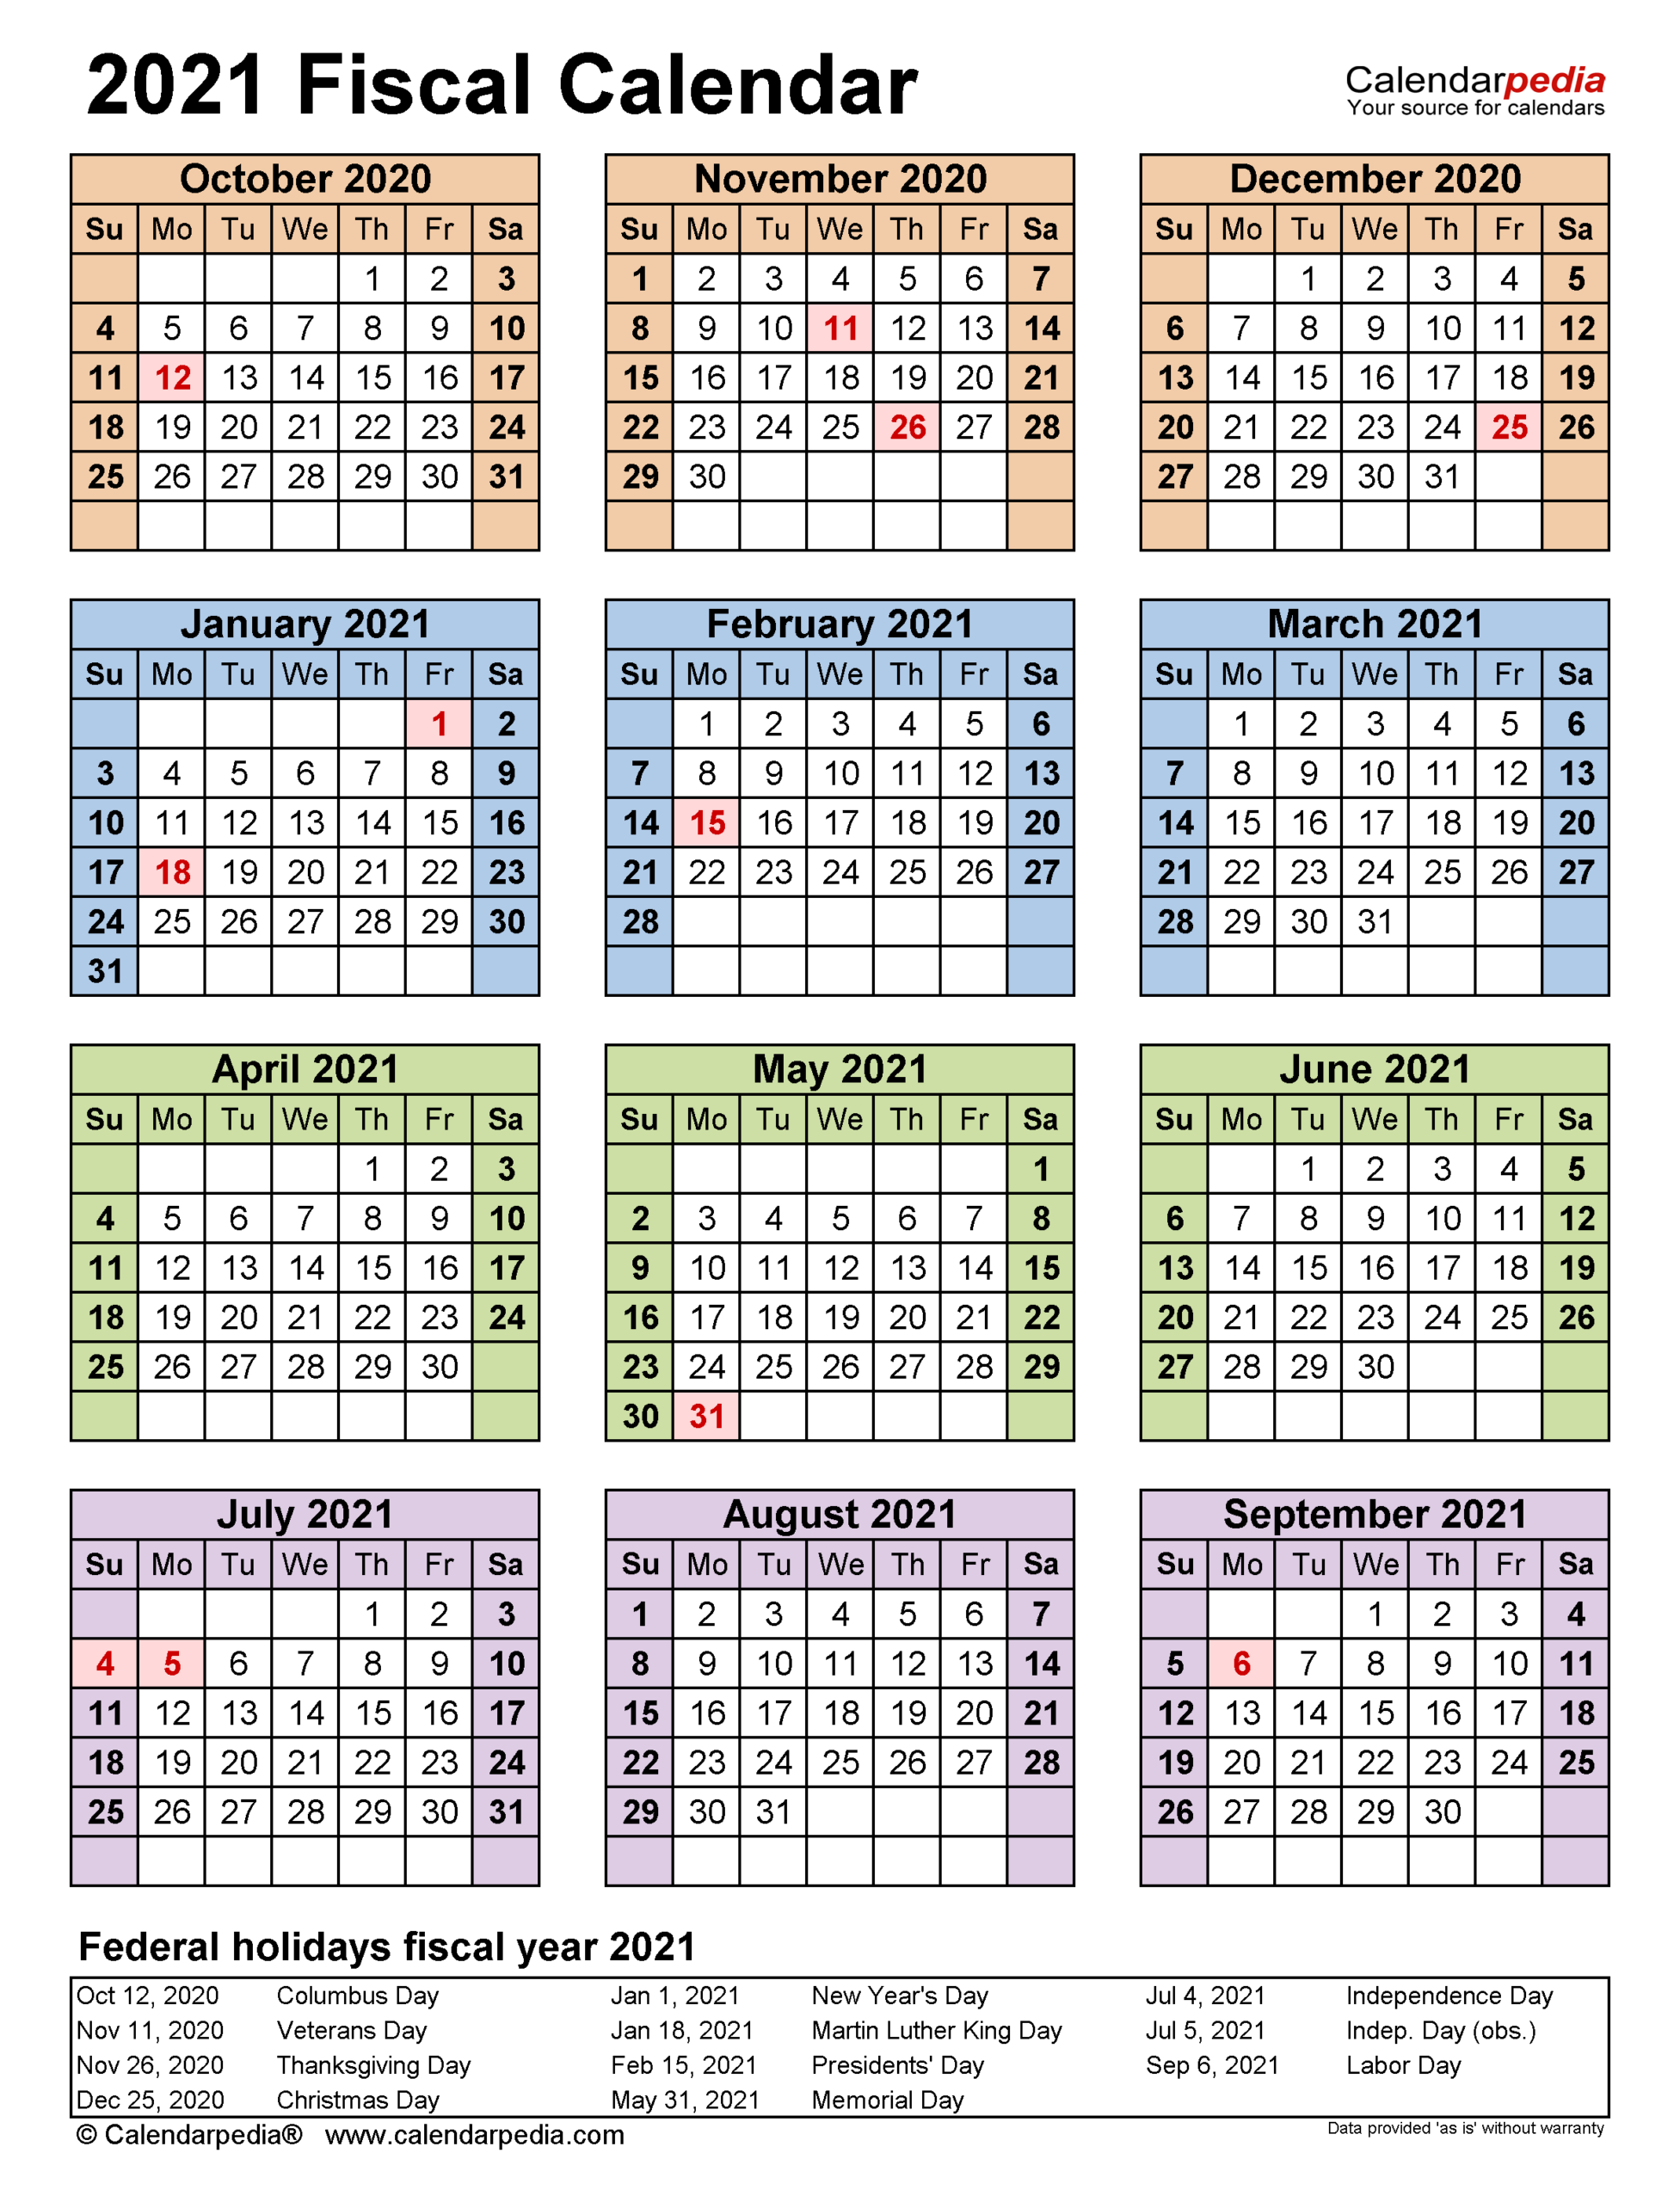 Payroll Calendar Printable For 2020